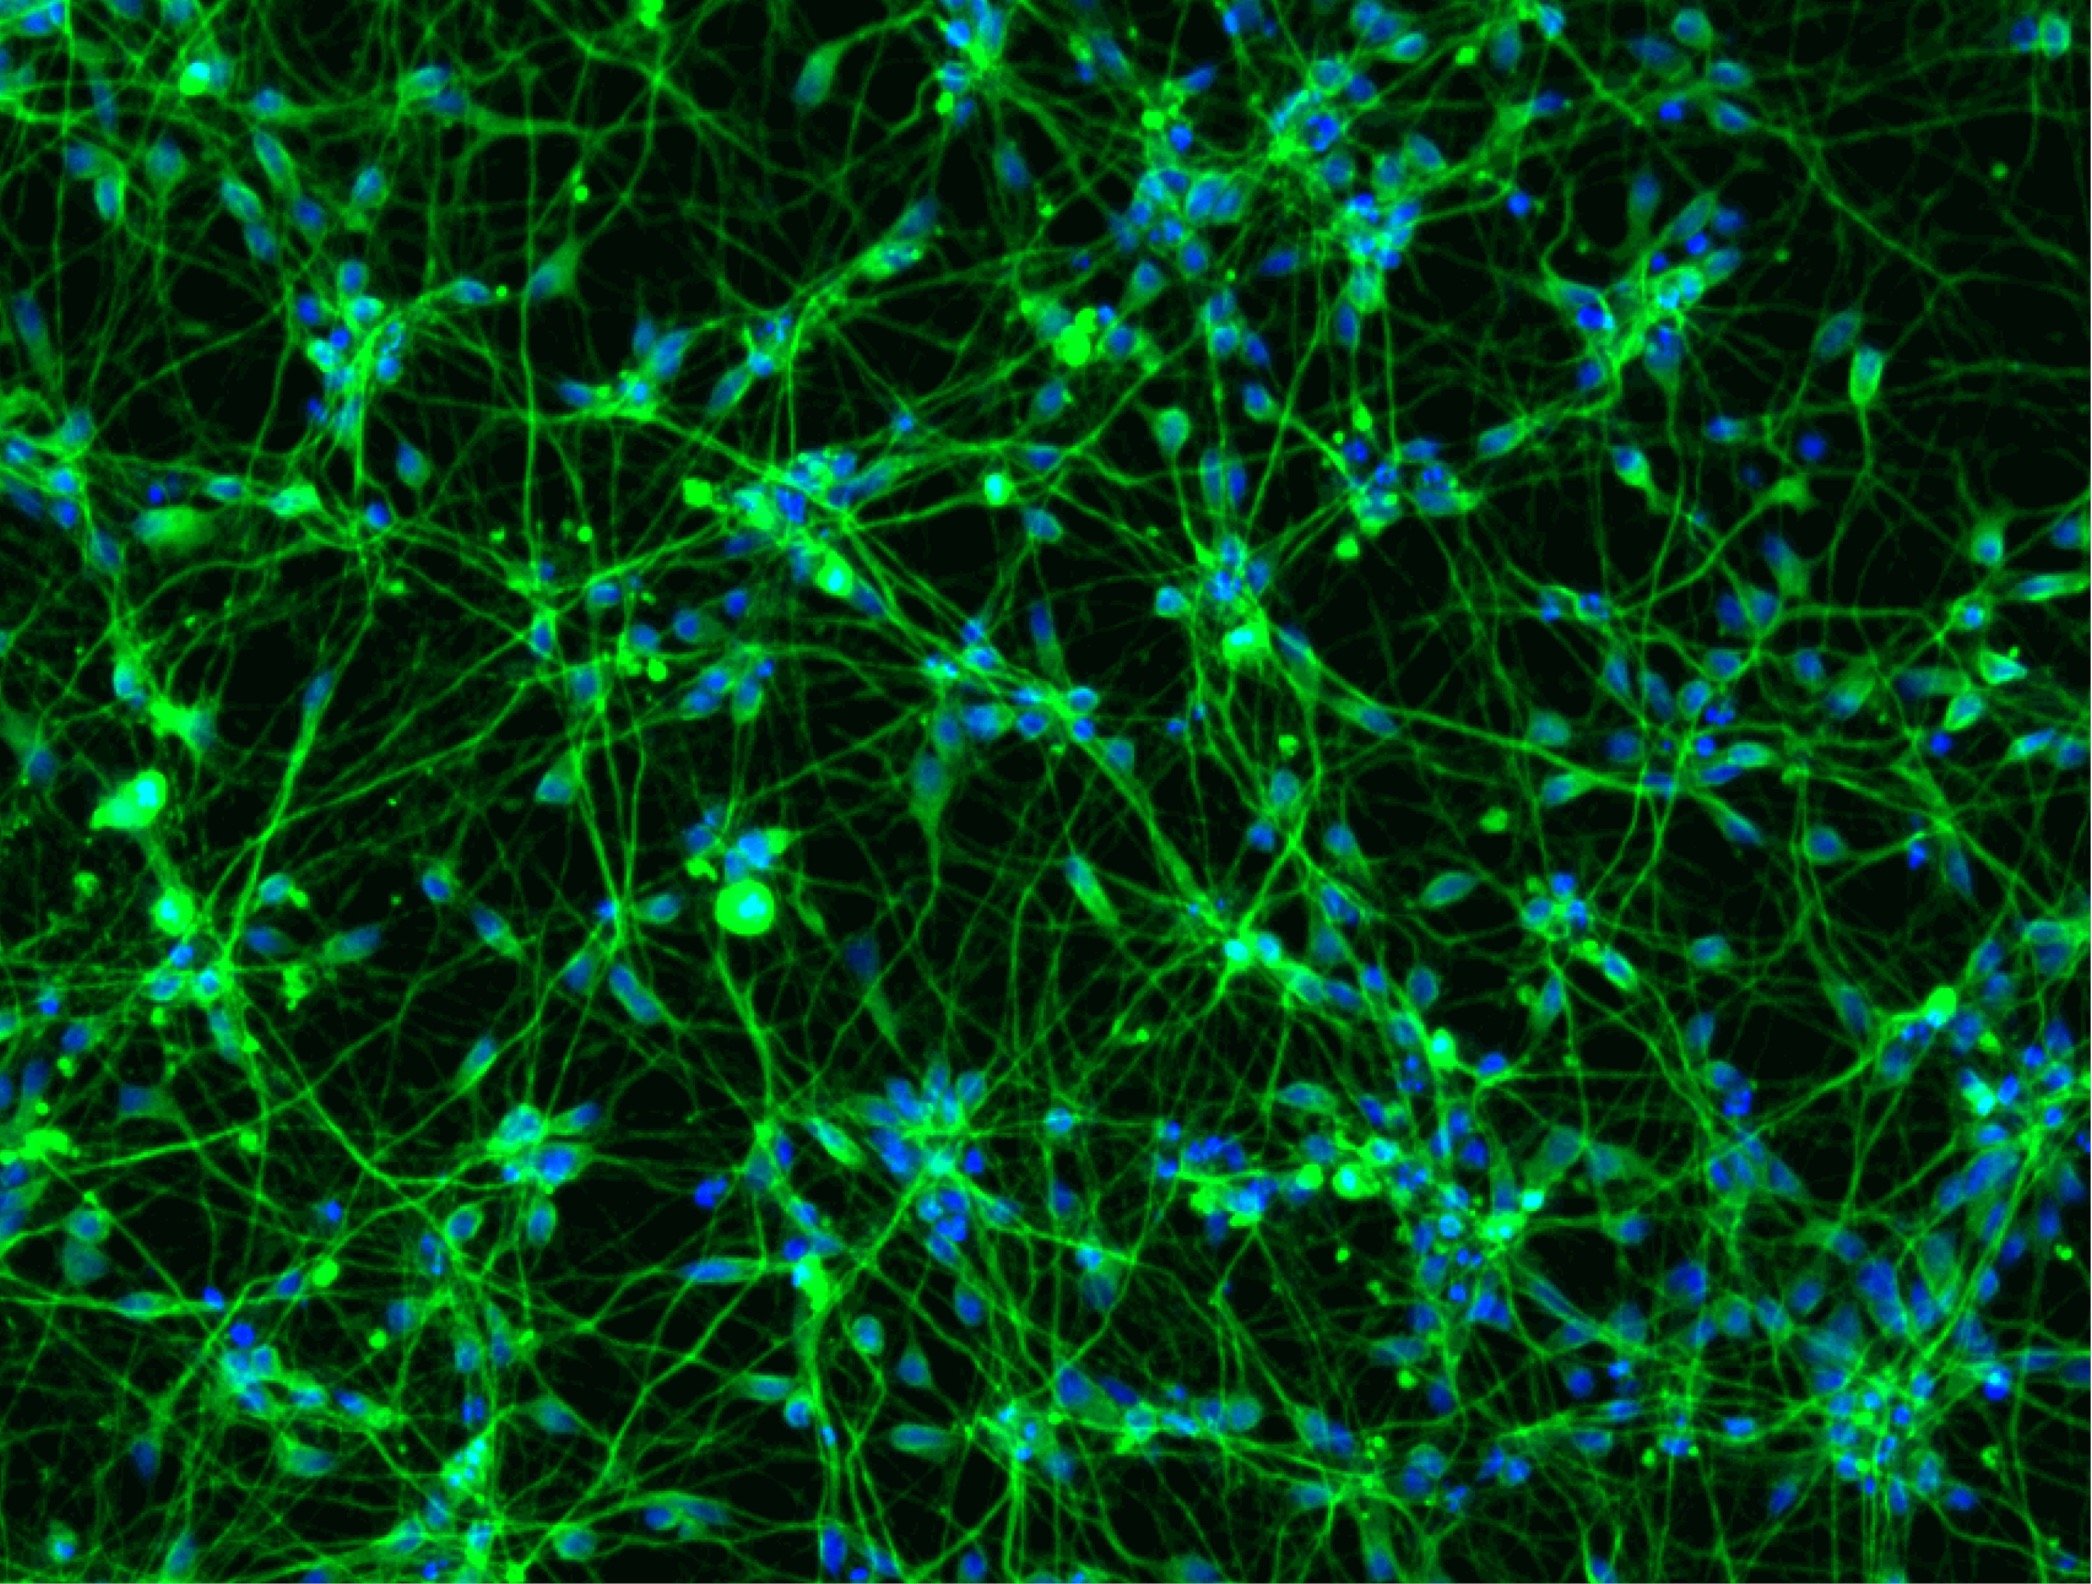 Depletion of Intracellular Glutamine Pools Triggers Toxoplasma gondii Stage Conversion in Human Glutamatergic Neurons